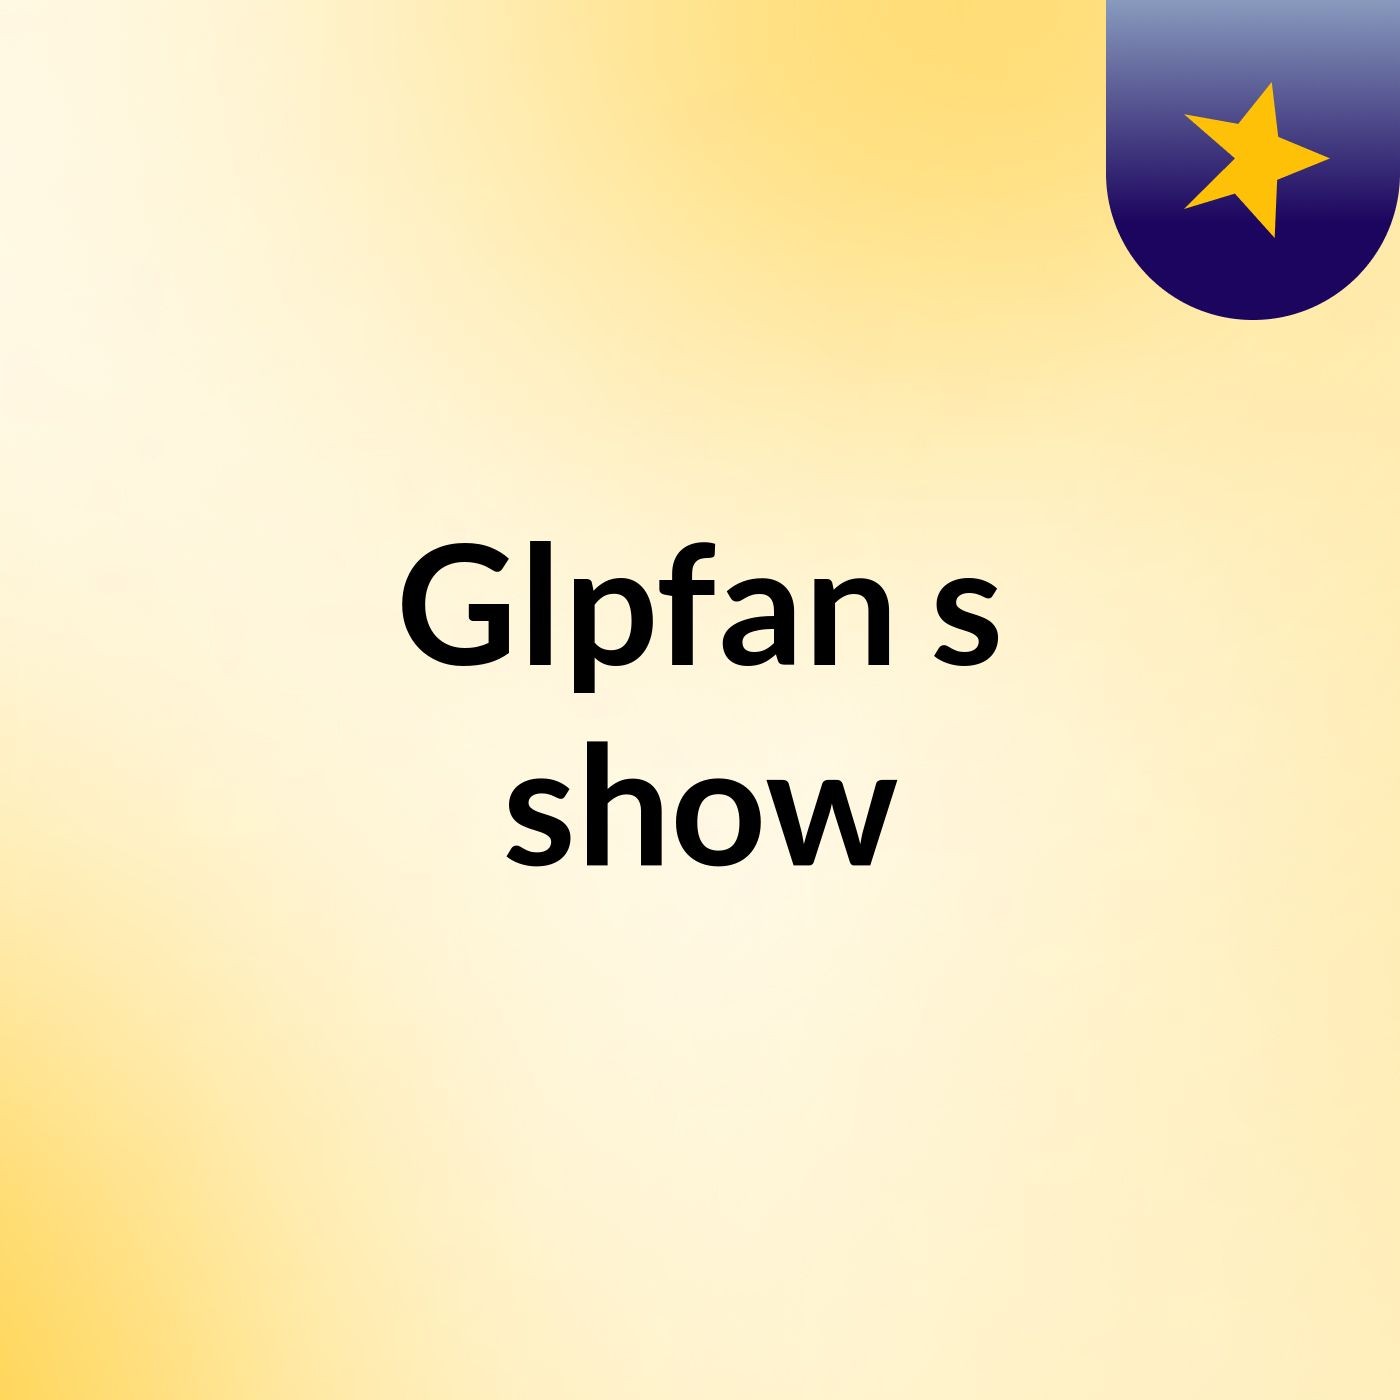 Glpfan's show